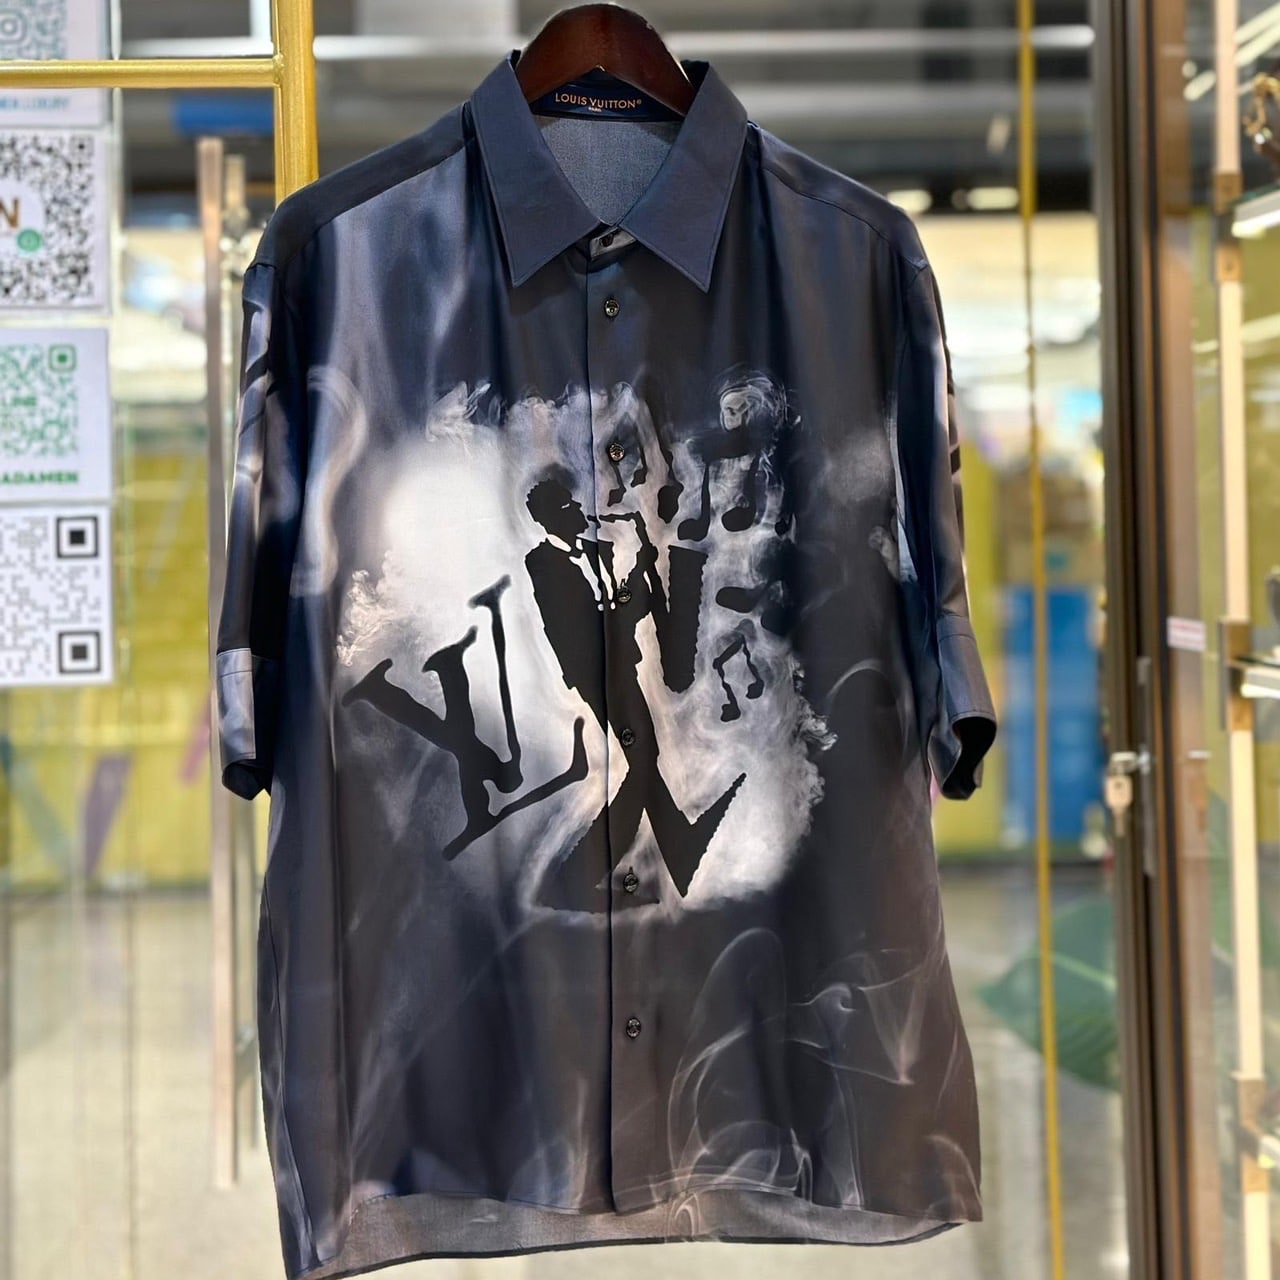 LOUIS VUITTON Tie Dye T-Shirt - Madame N Luxury